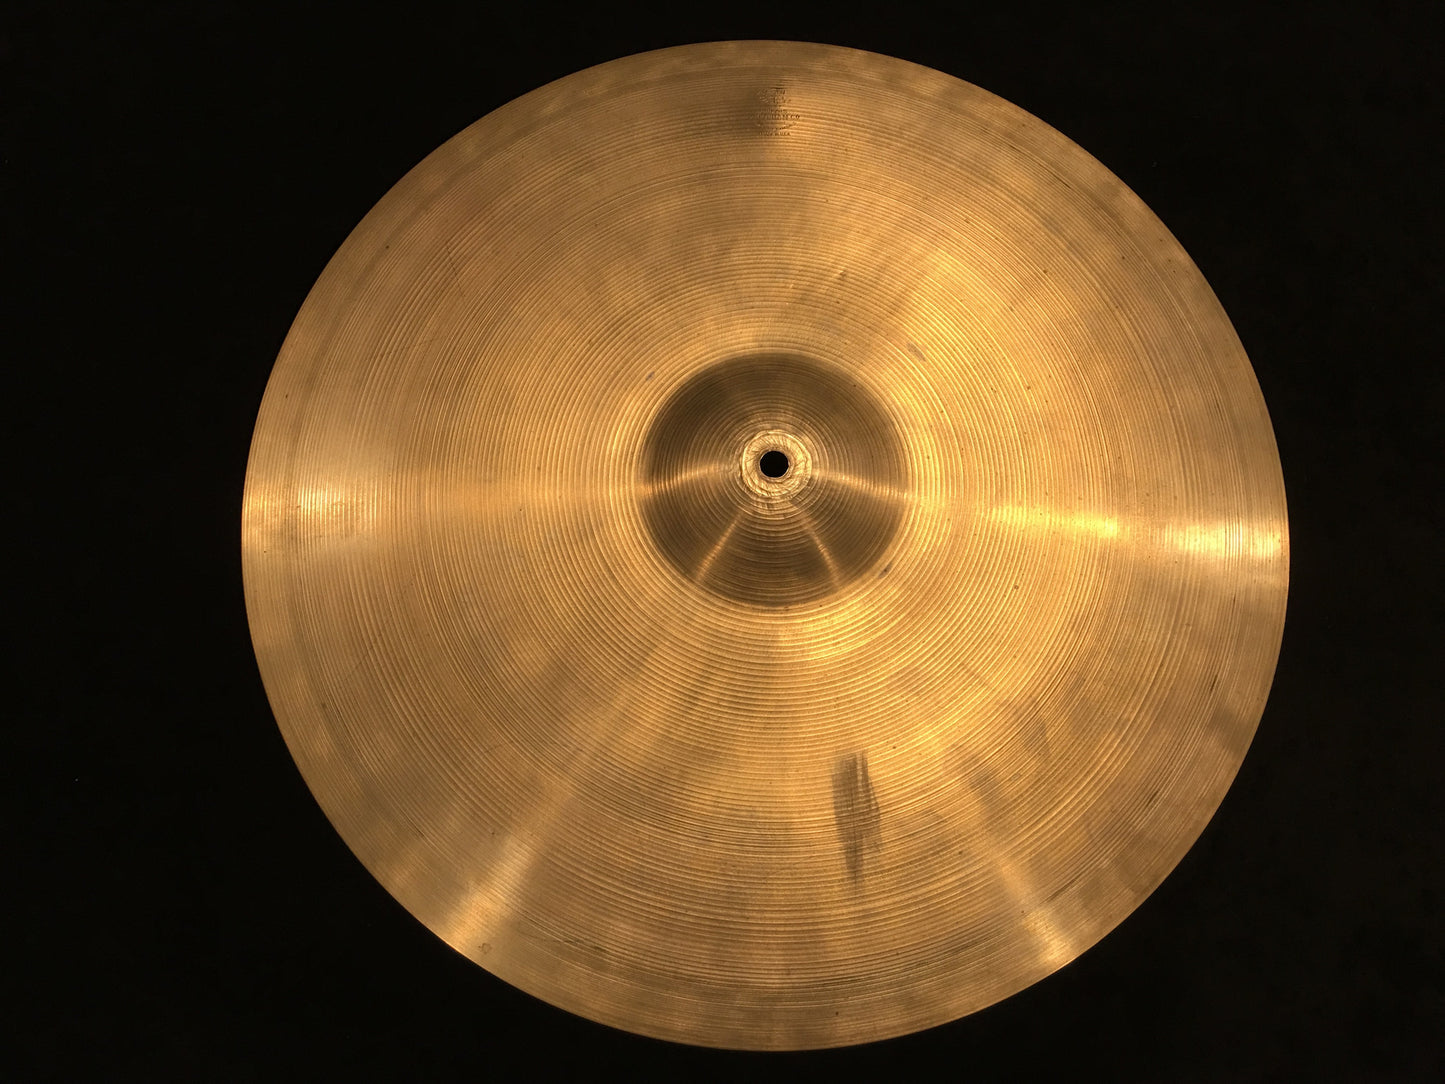 20" Zildjian A 1960's Ride Cymbal 2344g - Inventory # 49